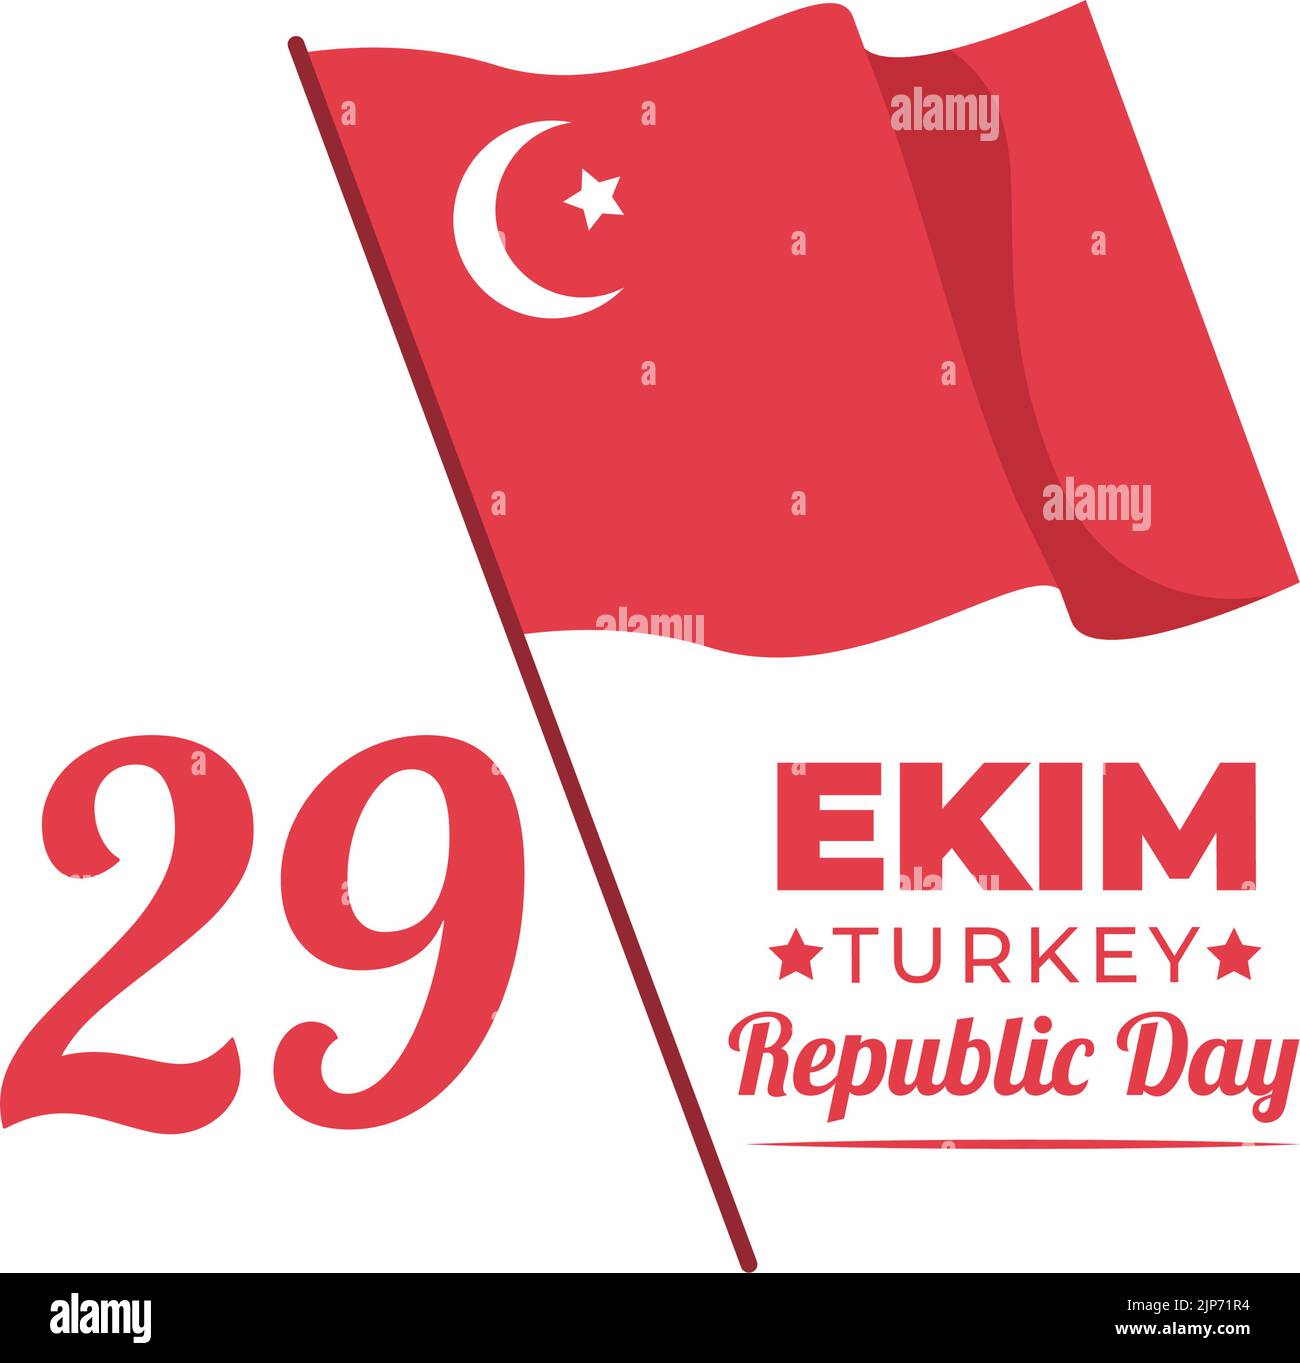 Republic Day Turkey or 29 Ekim Cumhuriyet Bayrami Kutlu Olsun Hand Drawn Cartoon Flat Illustration with Flag of Turkish and Happy Holiday Design Stock Vector